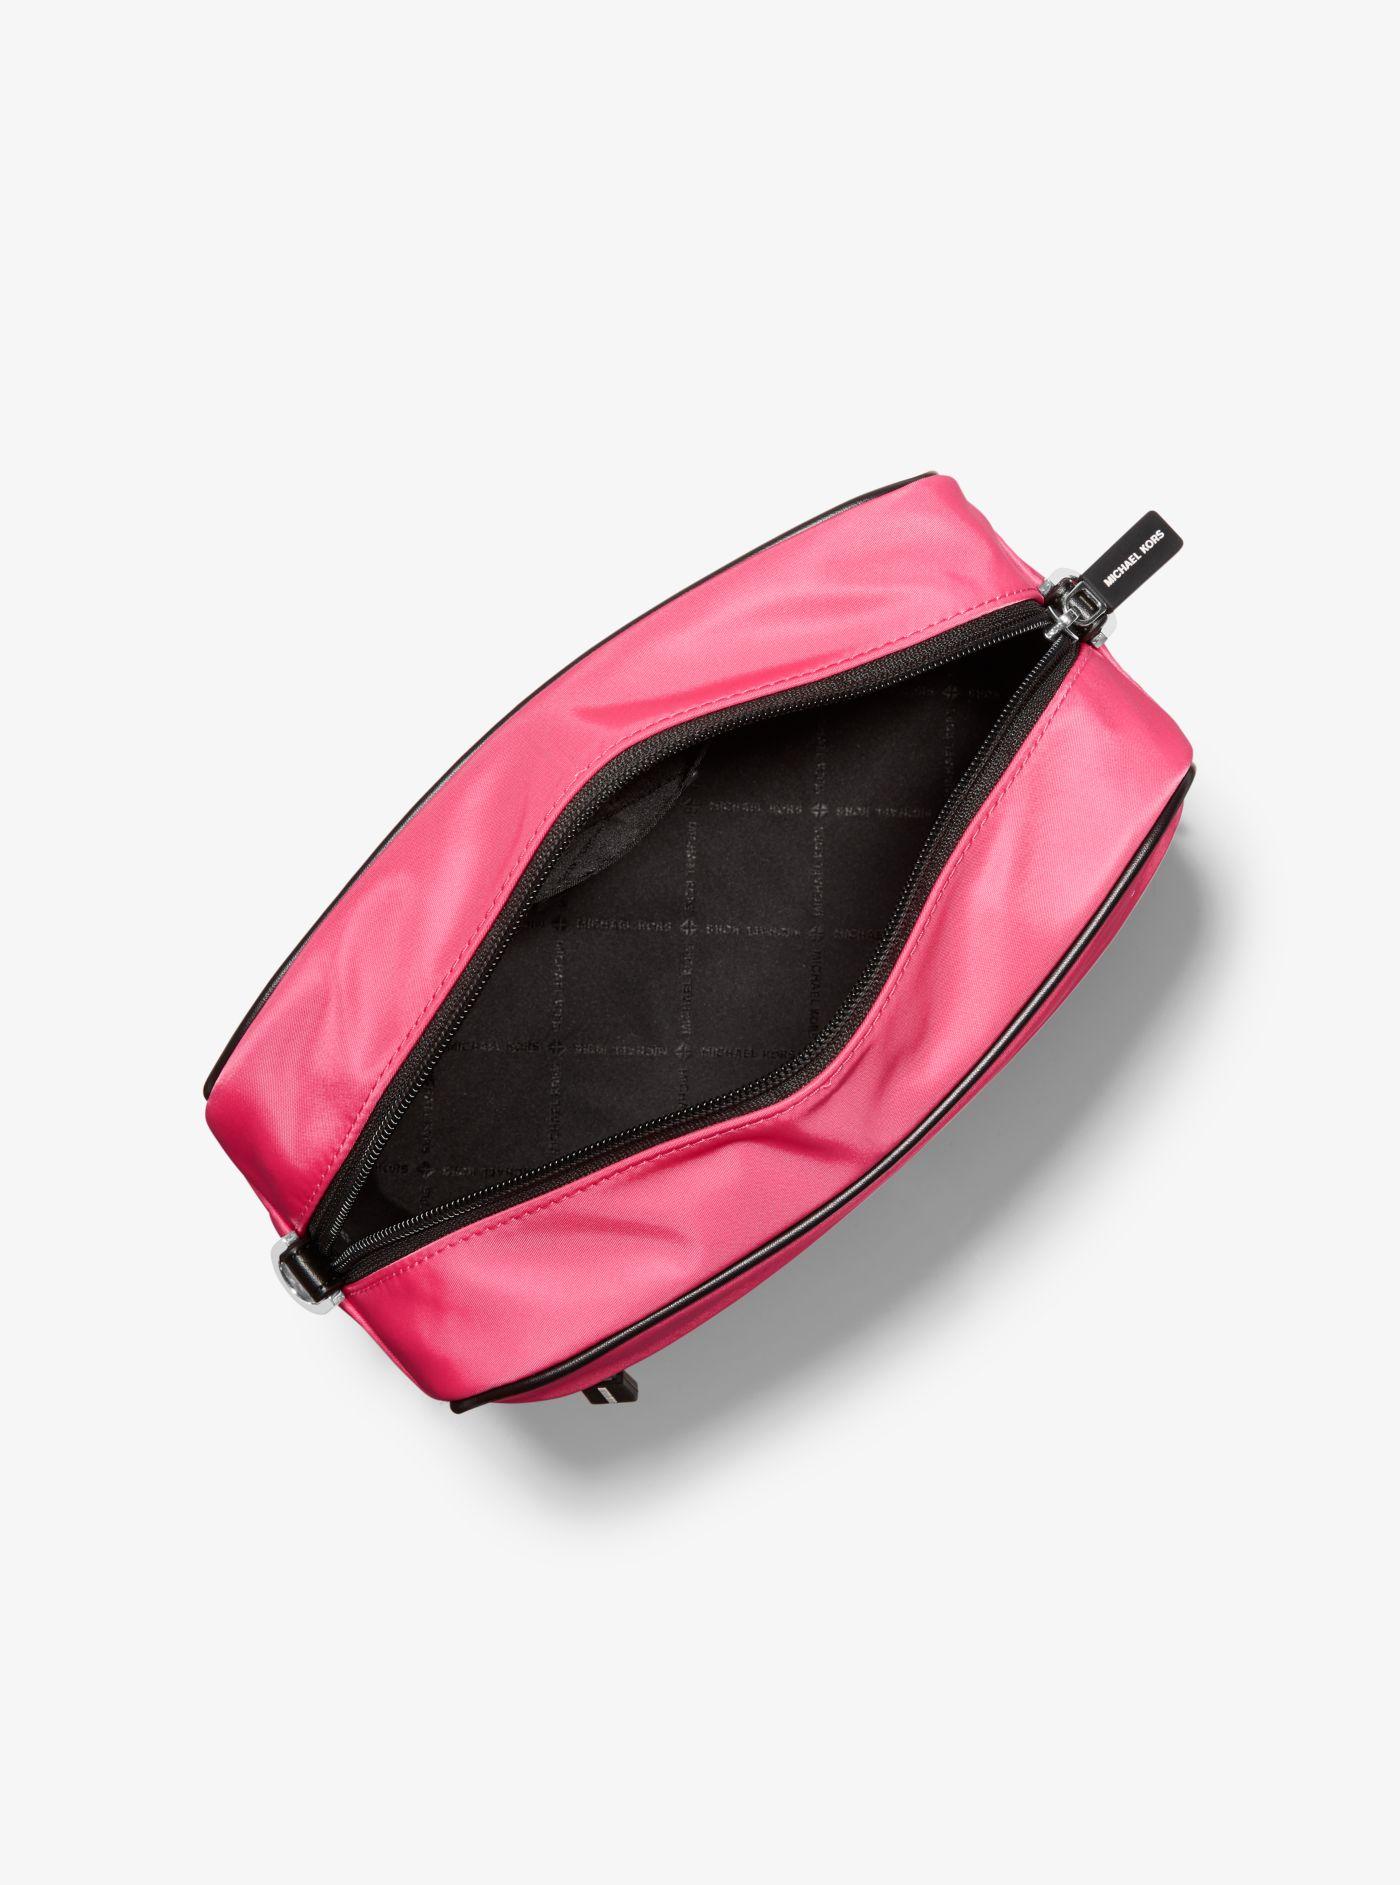 Michael Kors Synthetic Medium Nylon Camera Bag in Bright Pink 